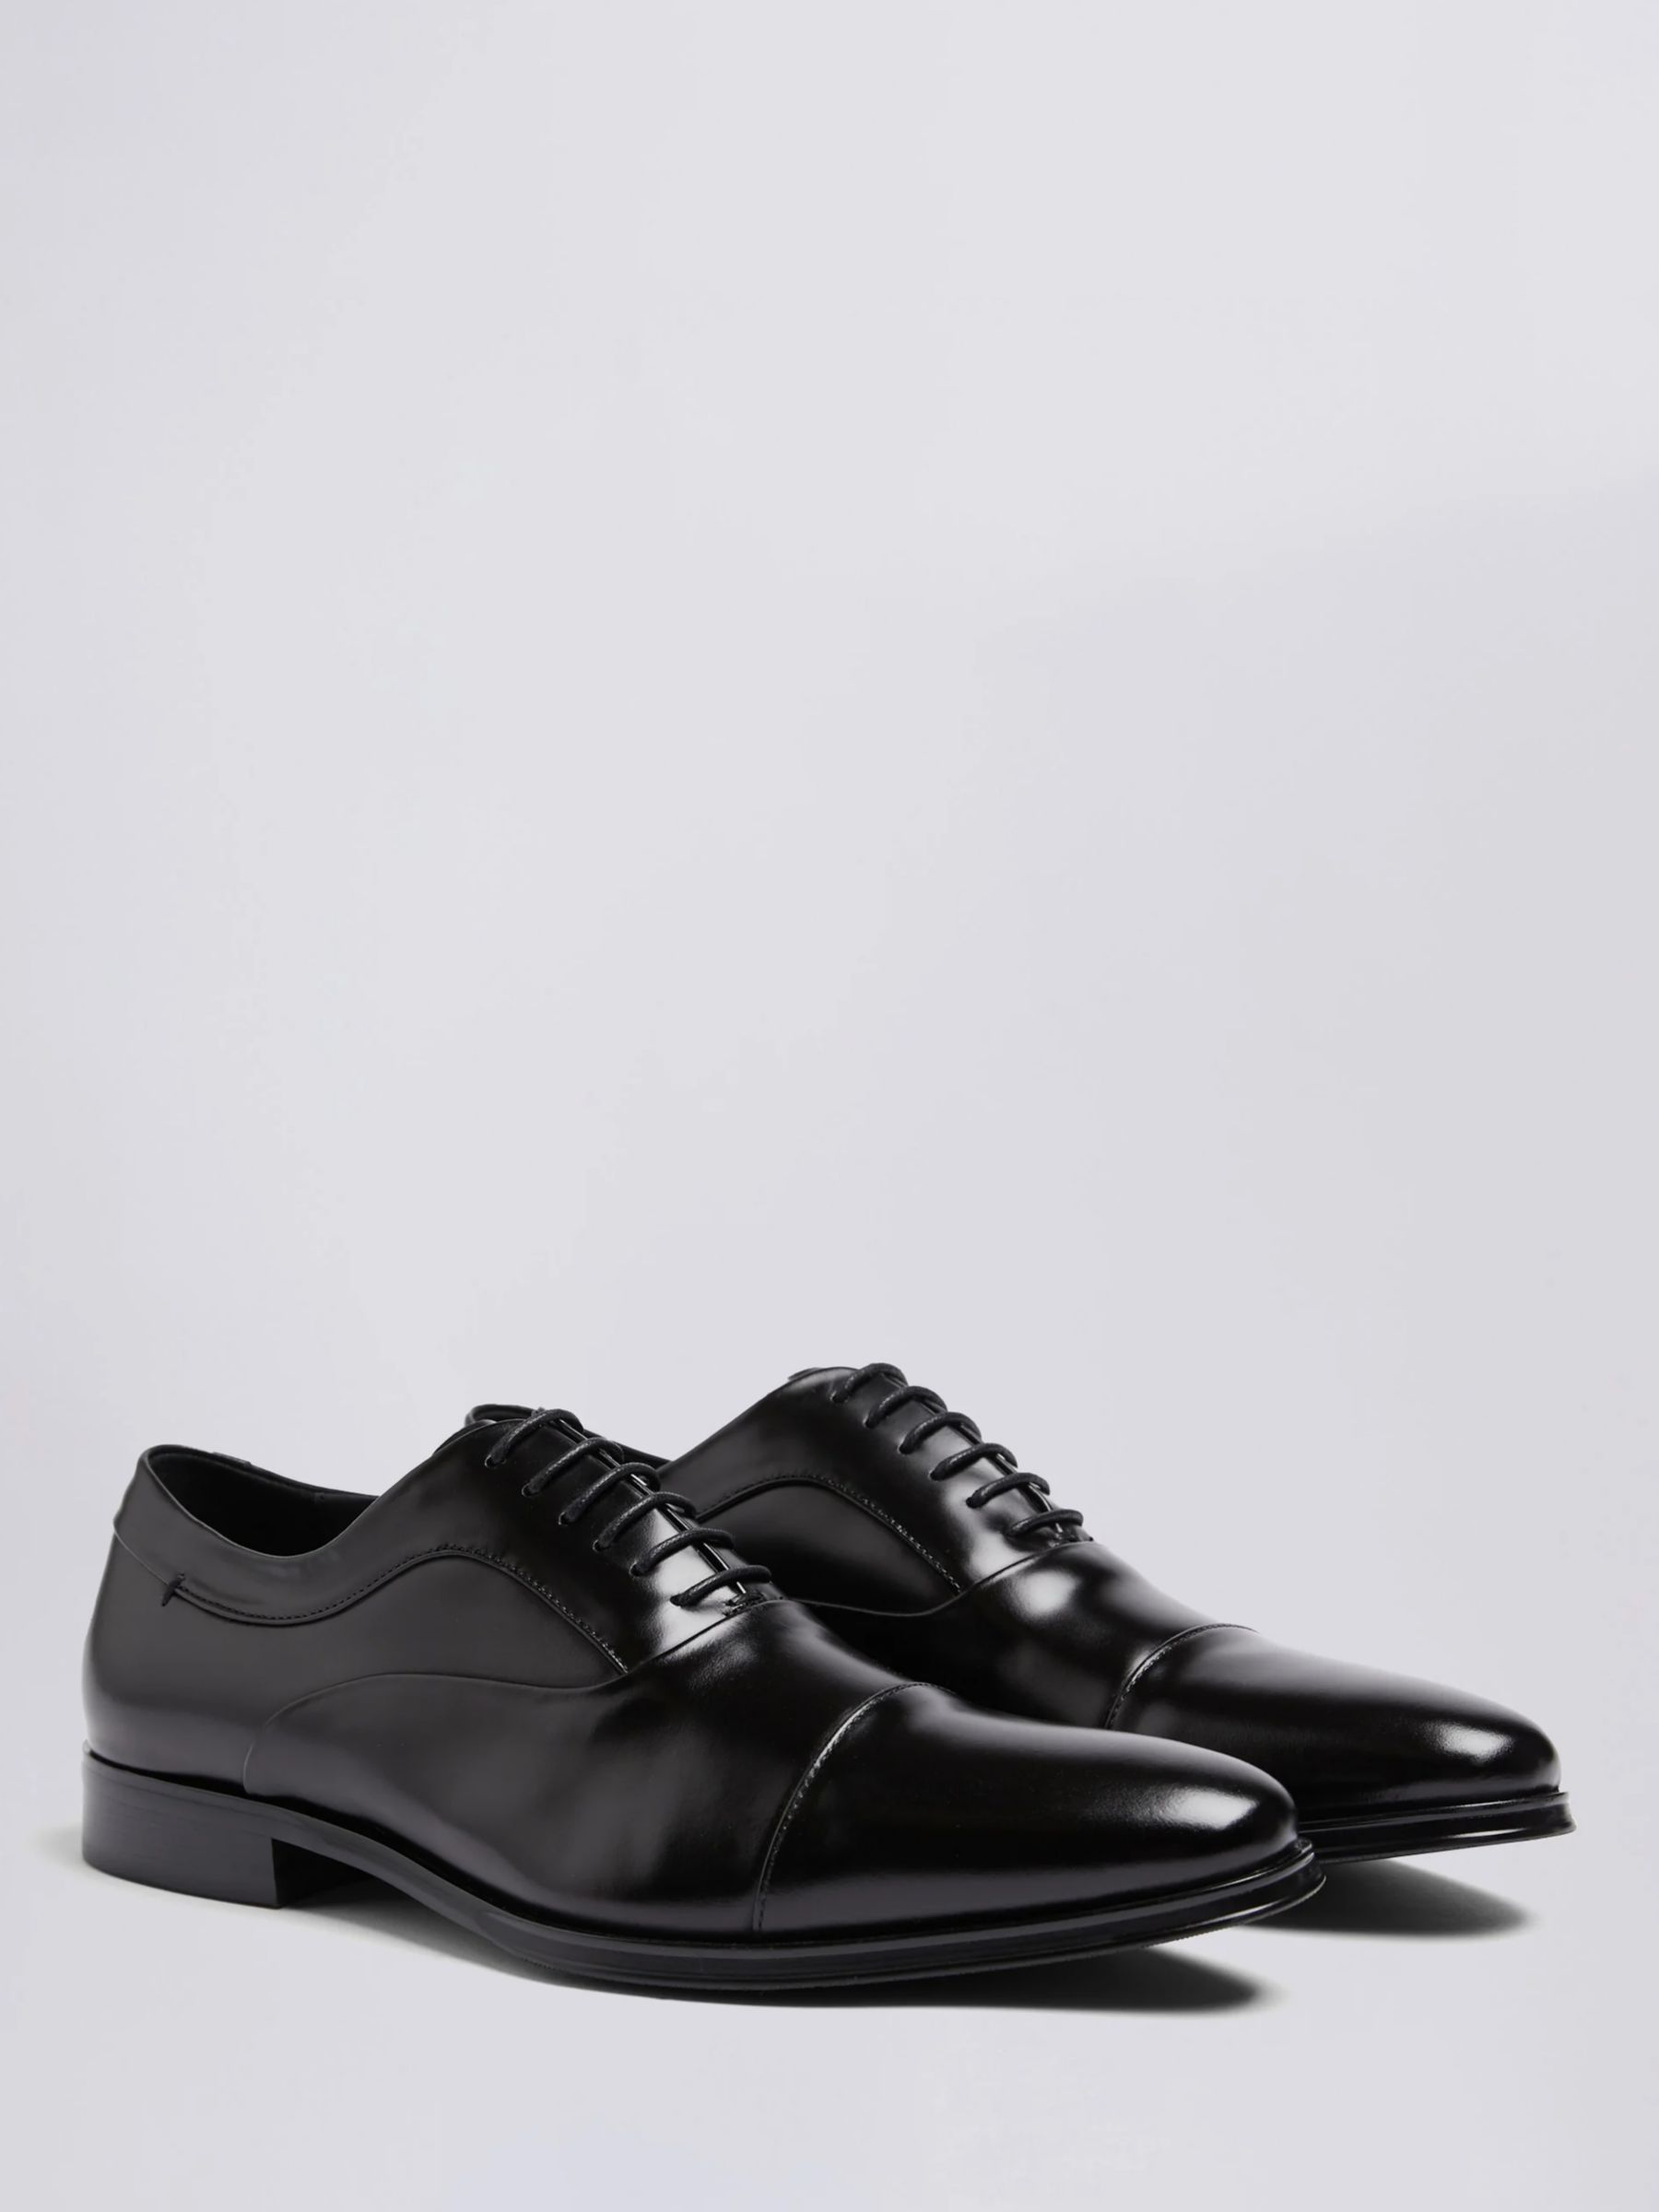 Moss John White Guildhall Brown Oxford Shoe, Black at John Lewis & Partners